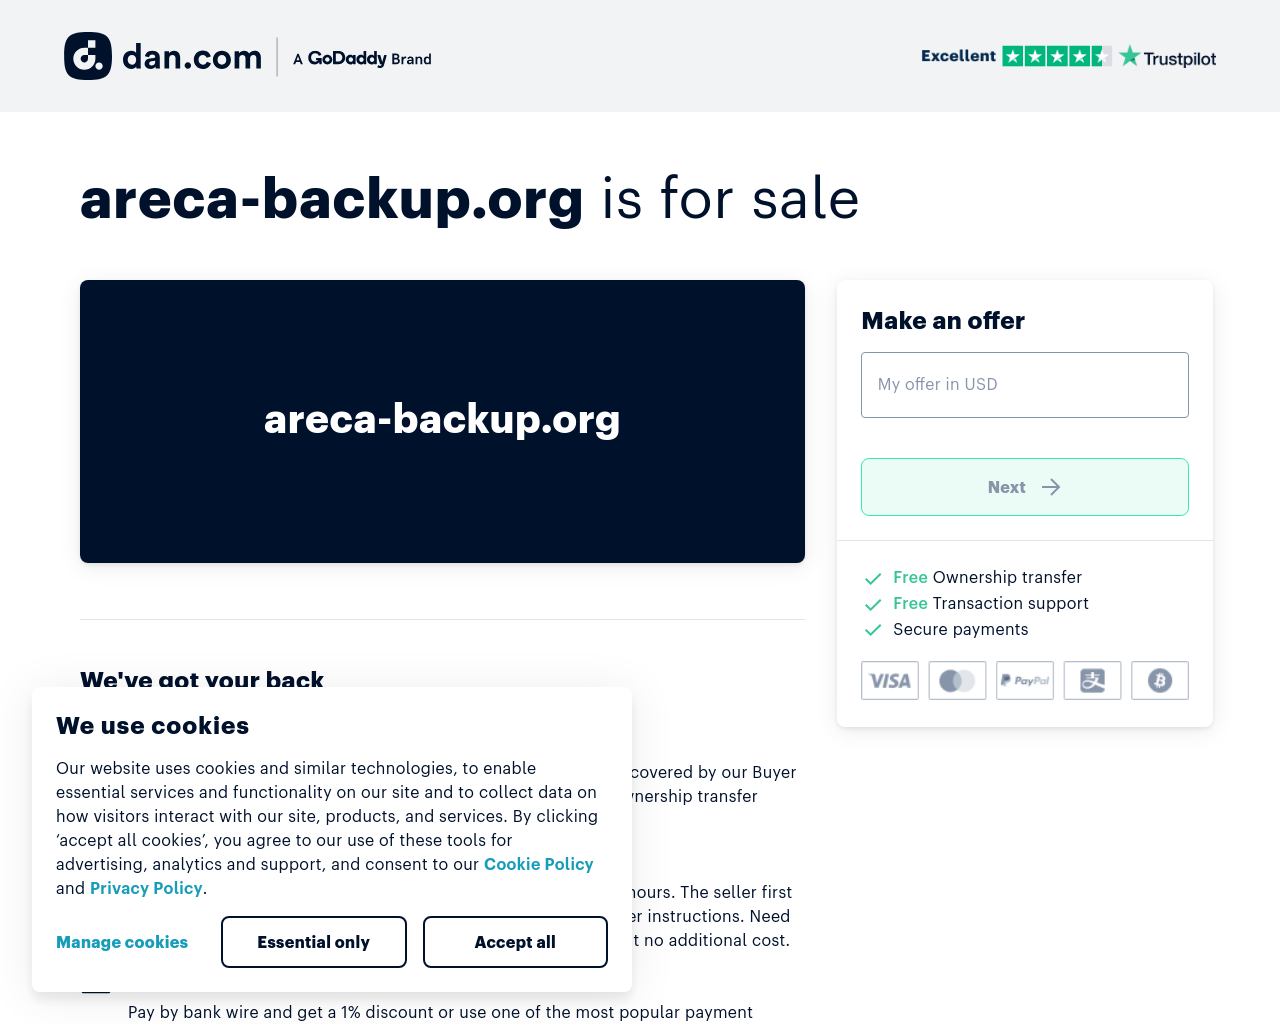 areca-backup.org